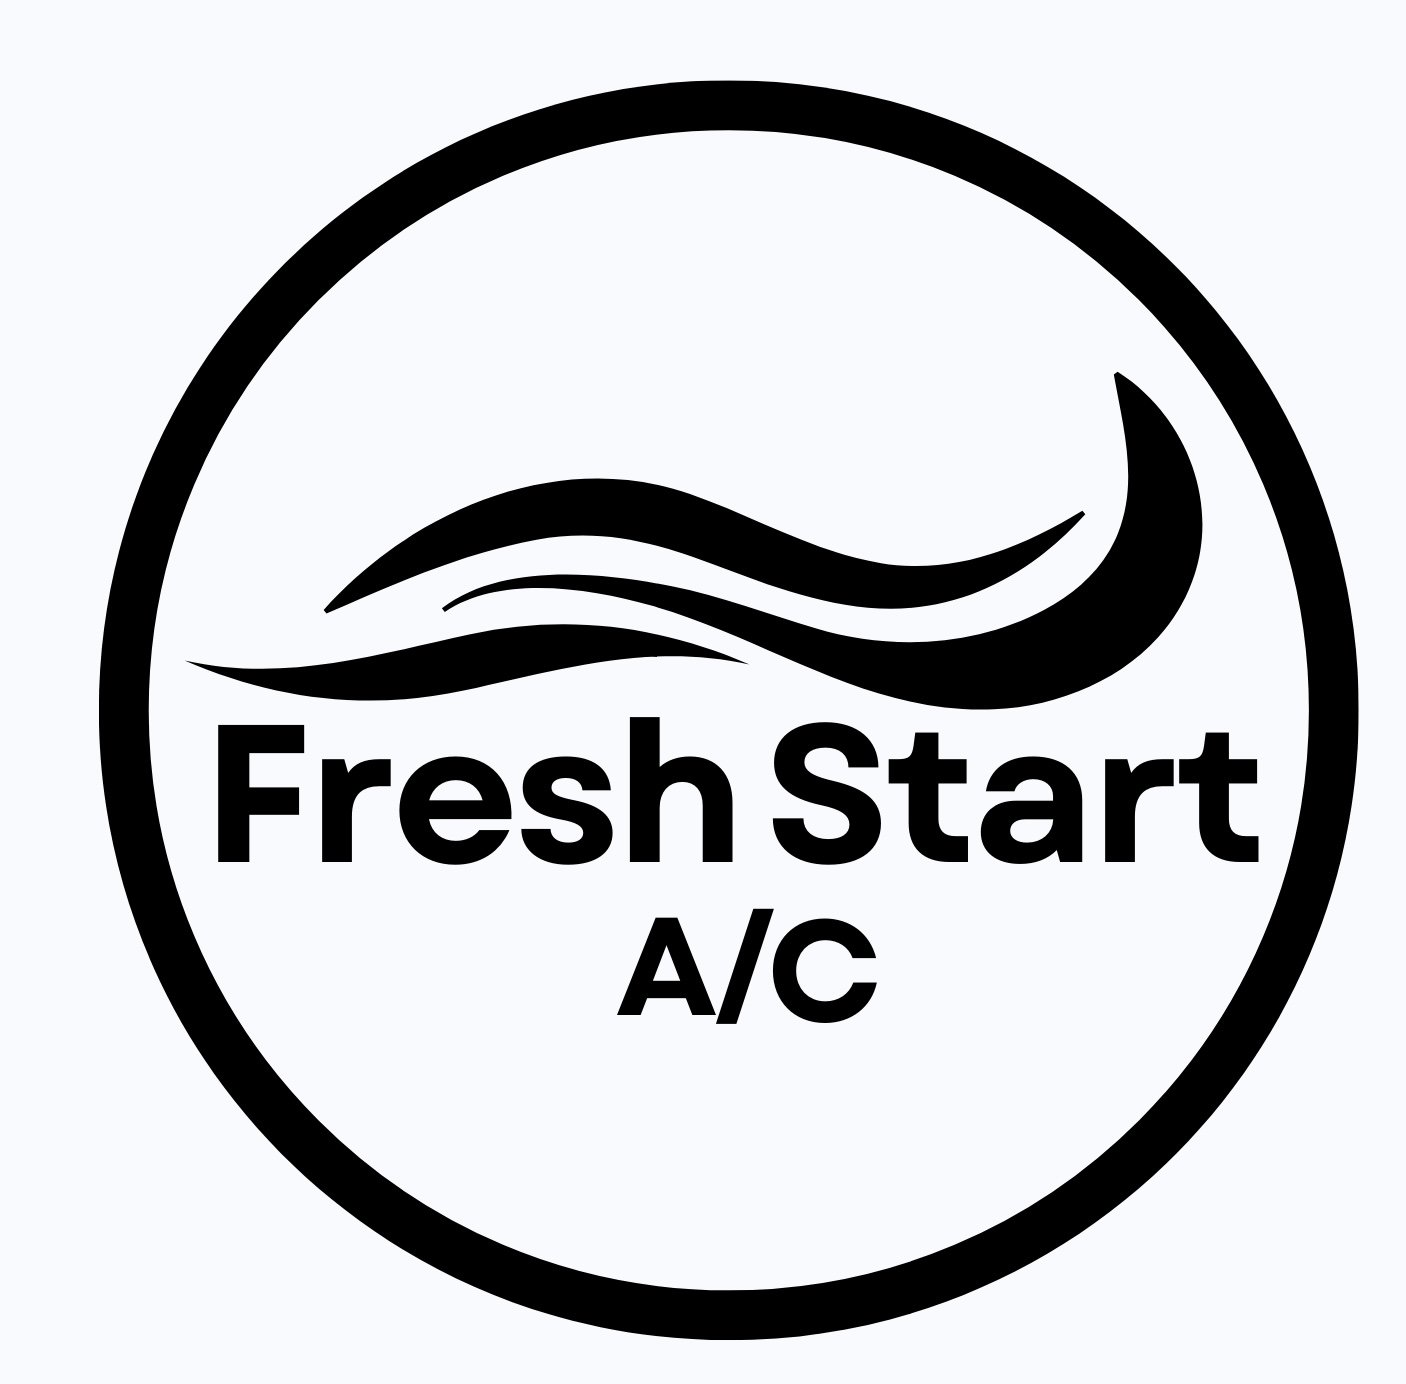 Fresh start shirt small logo  